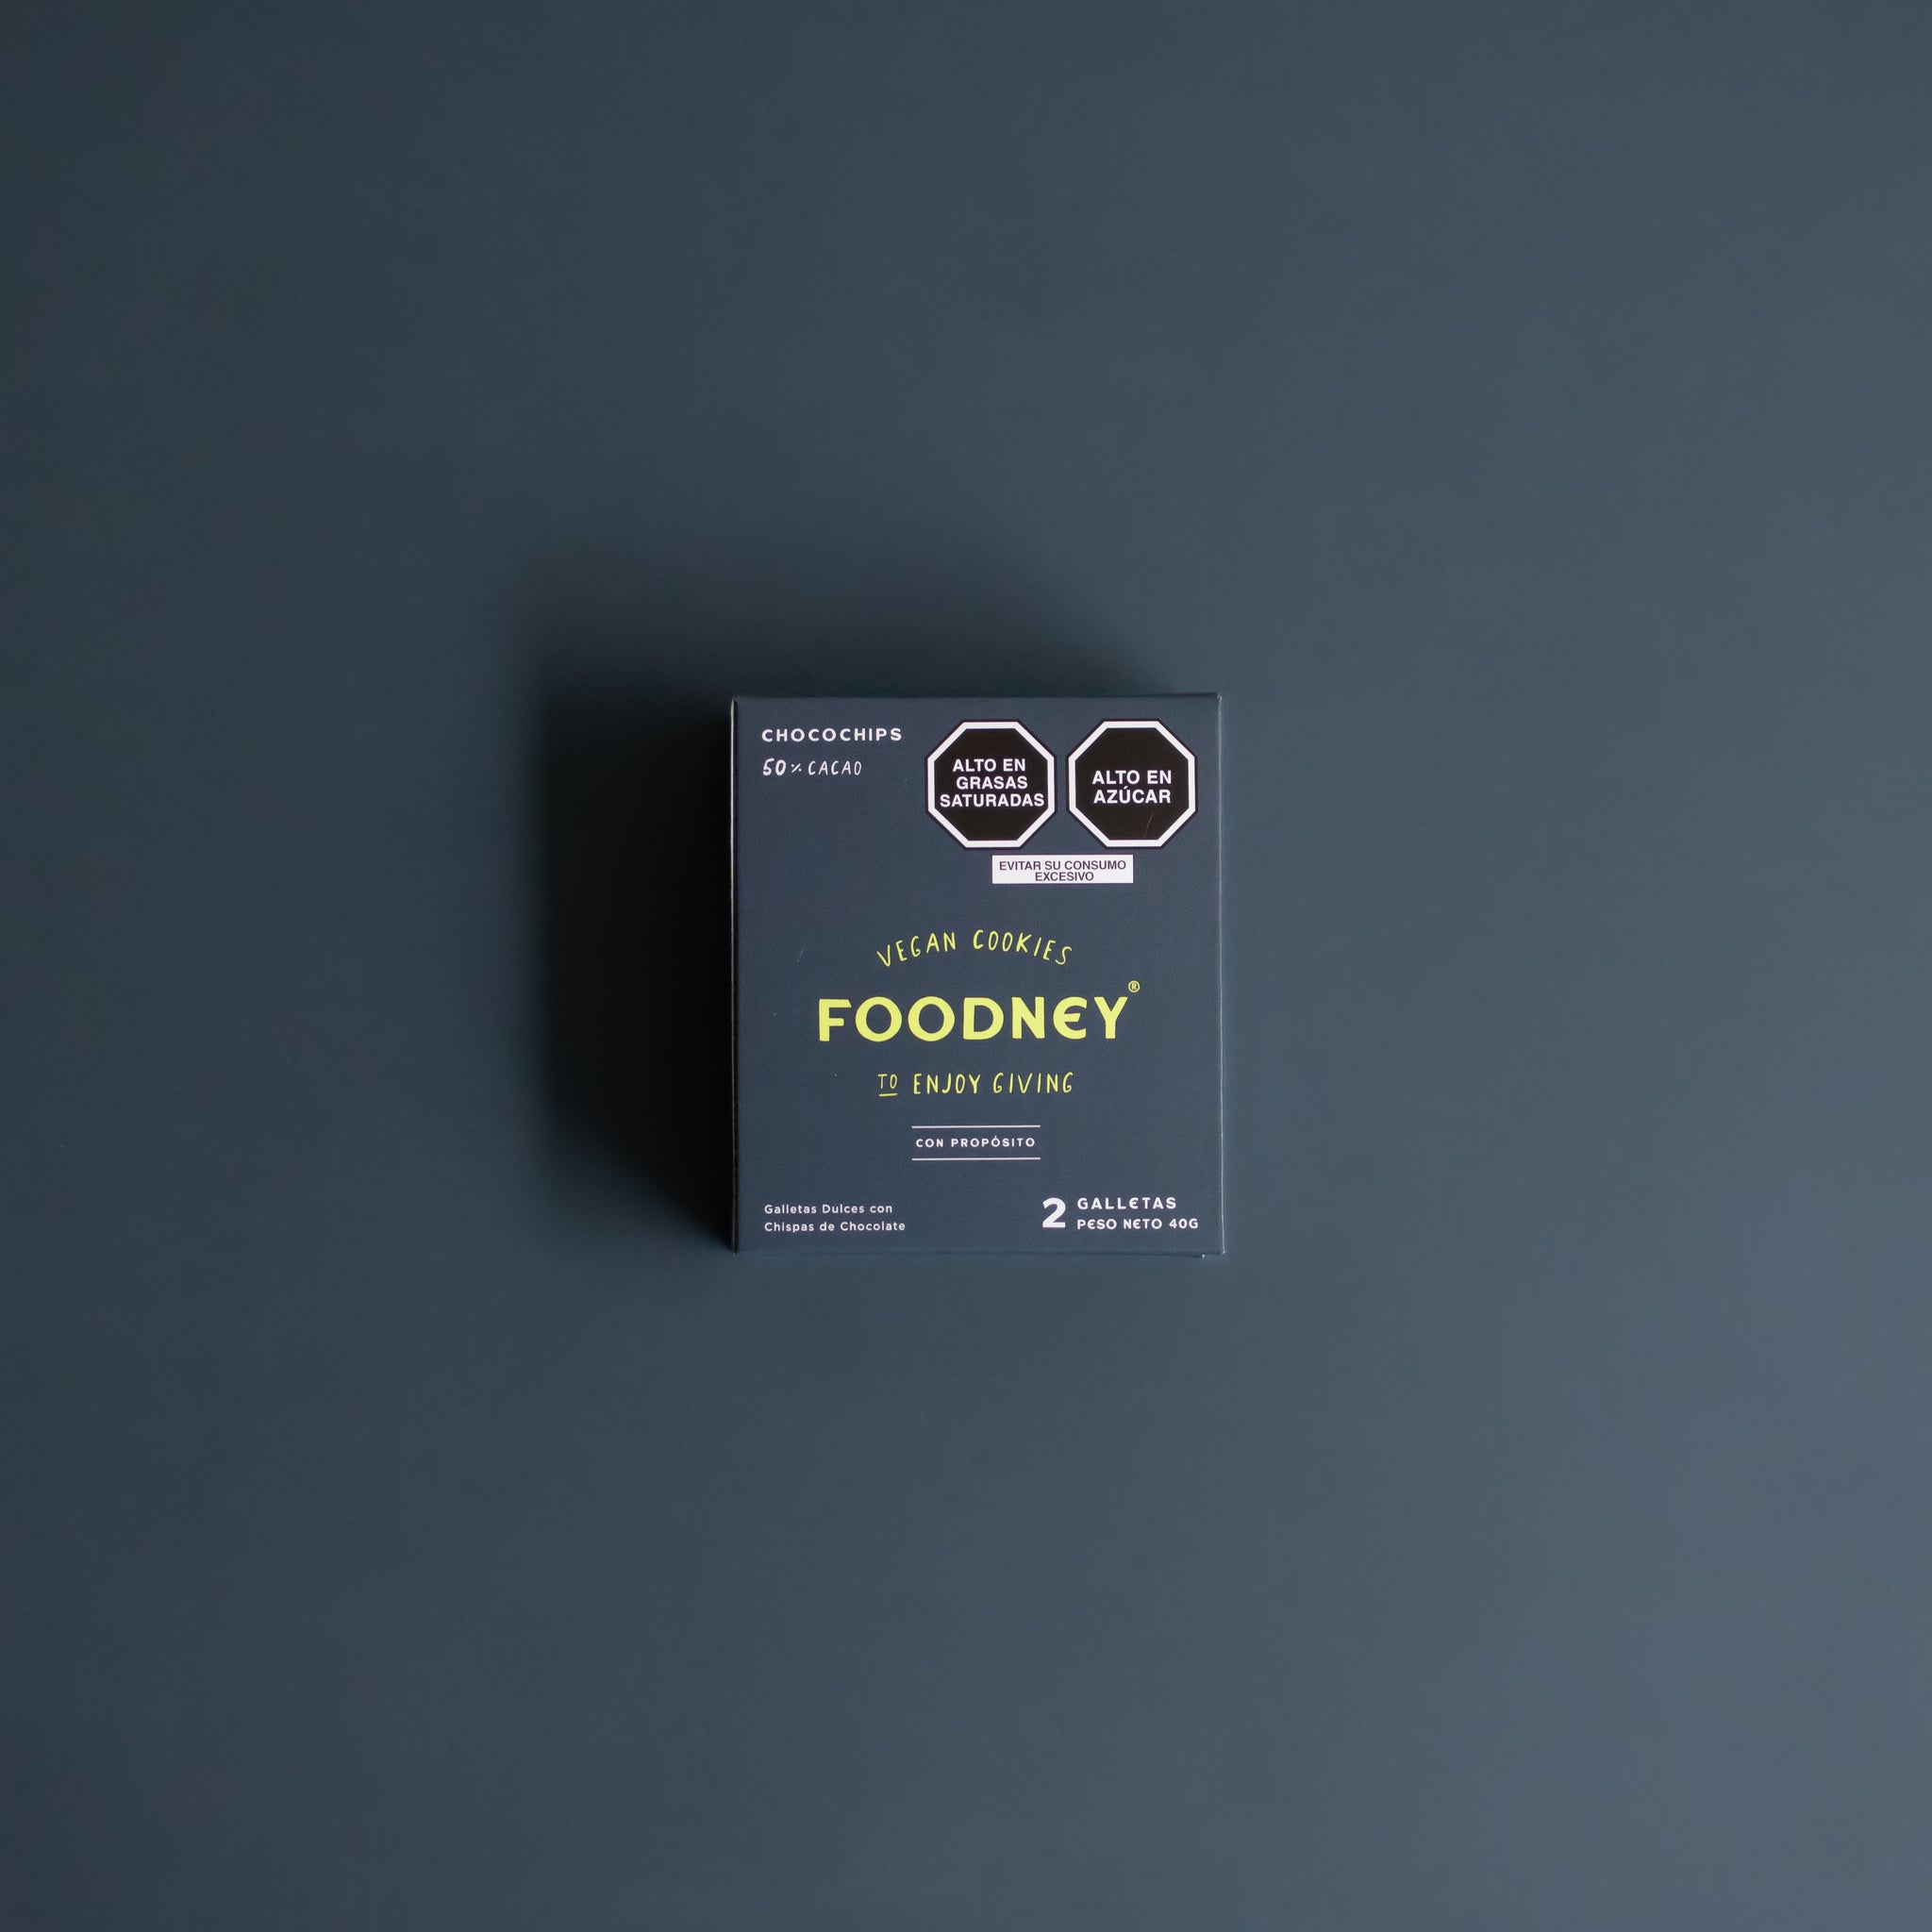 Foodney Chocochips x40g